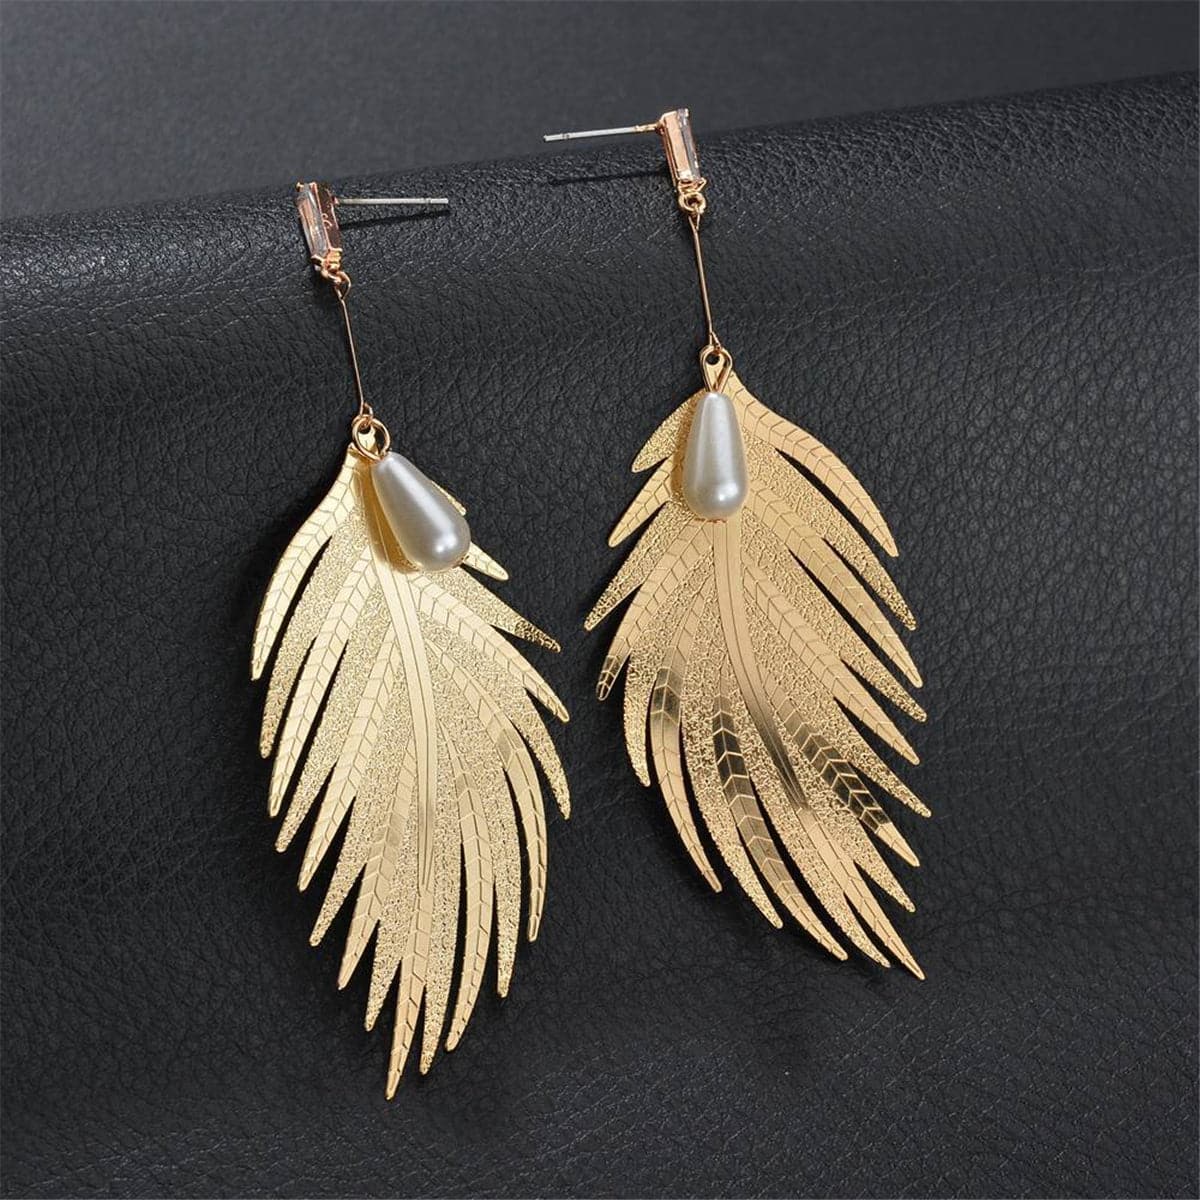 Pearl & Crystal 18K Gold-Plated Wing Drop Earrings